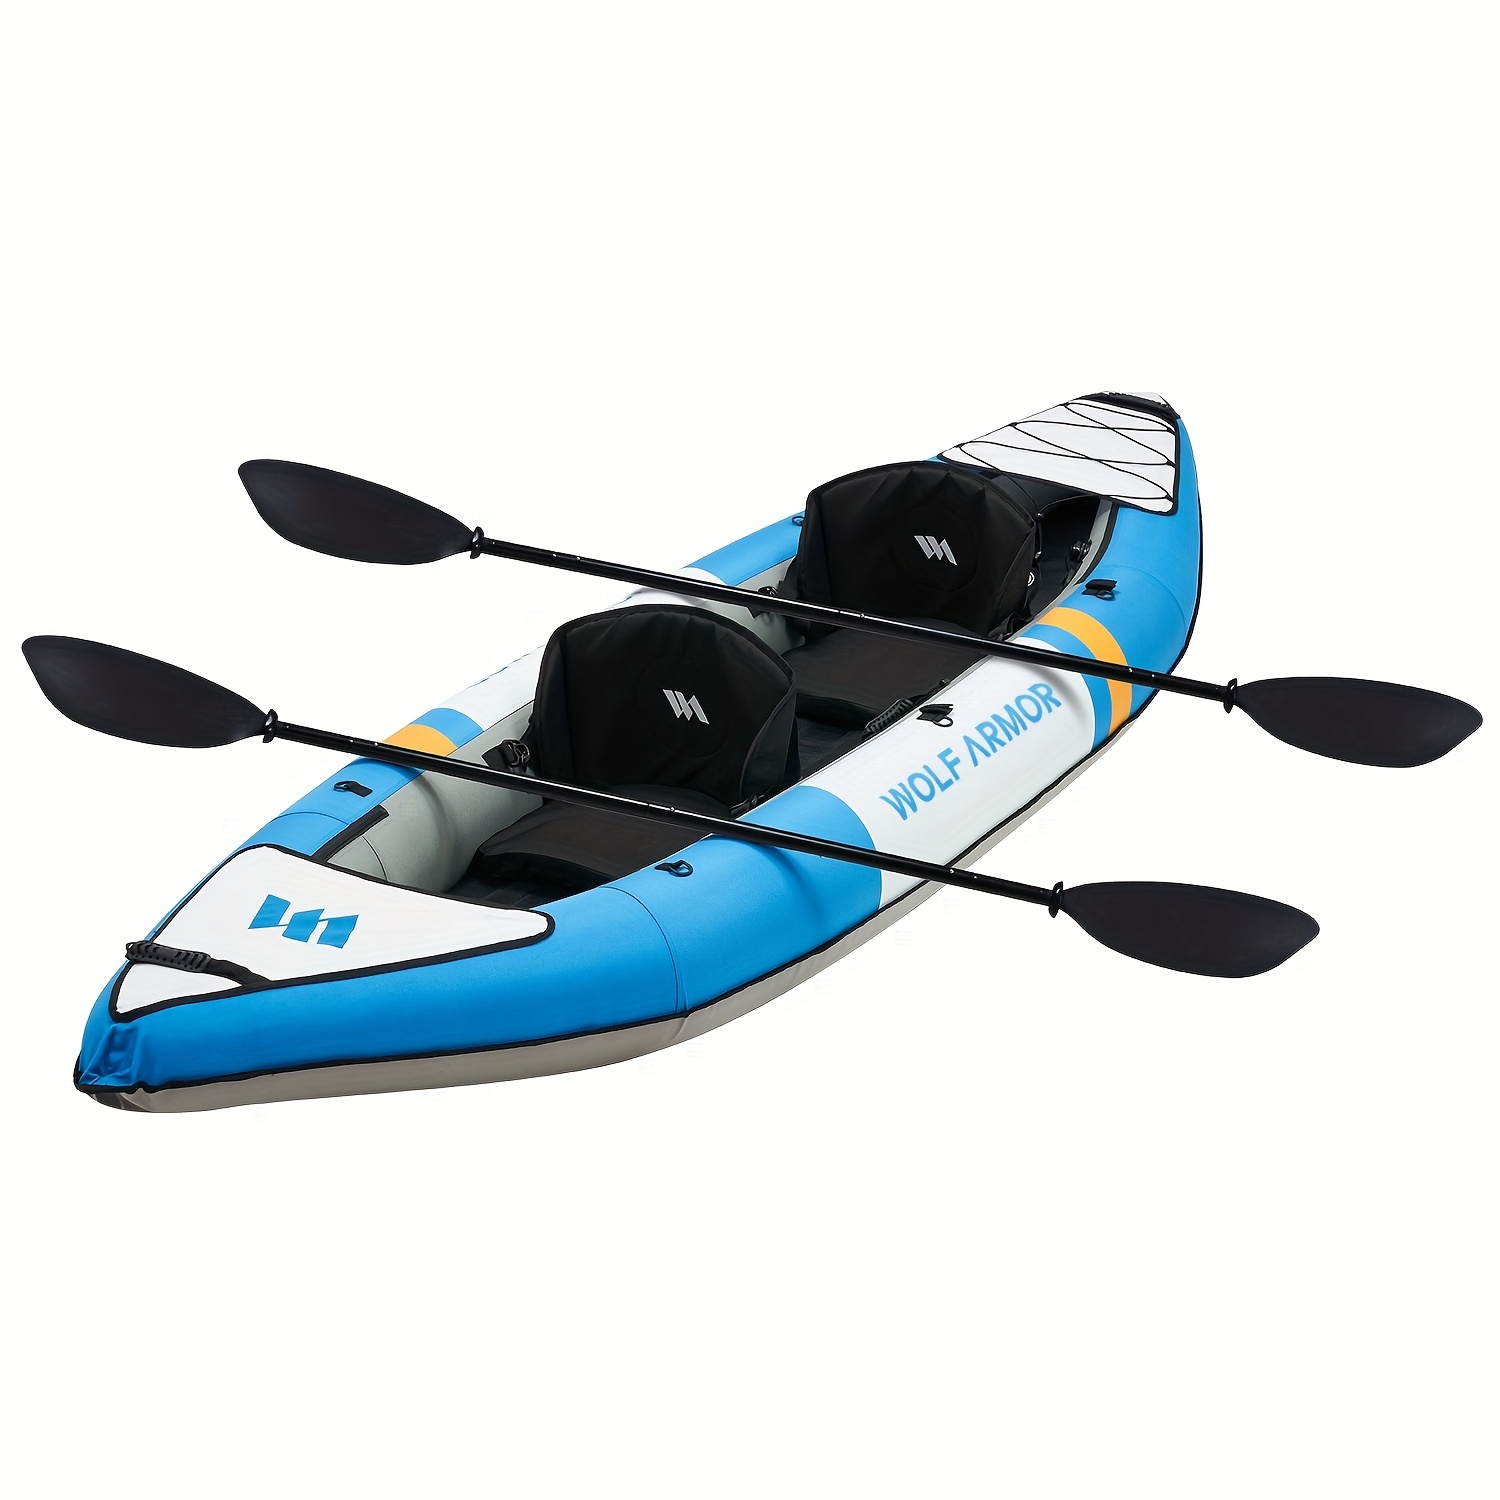 Kayak Seat Cushion Pad, Fishing Boat Seat with Storage Bag, Universal  Adjustable Kayaks Seat, Detachable Paddle Board Sit for Kayaking, Sup and